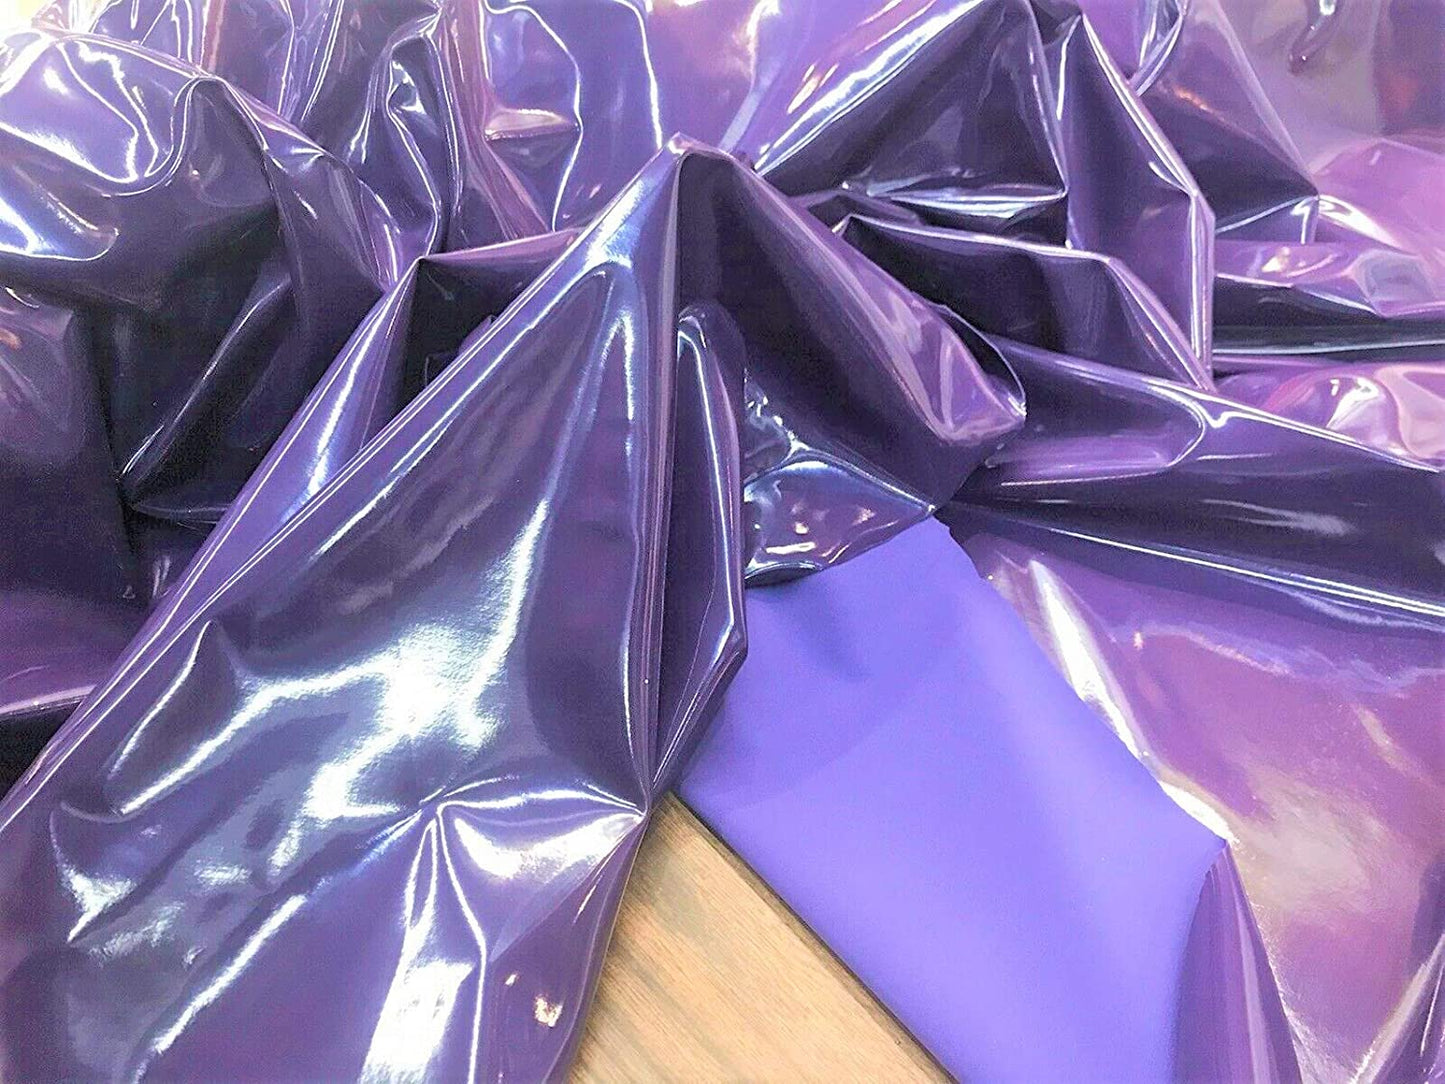 54" Wide Faux Leather Vinyl 4 Way Stretch Spandex Dance Wear Fabric by The Yard (Dark Purple, Glossy Vinyl)